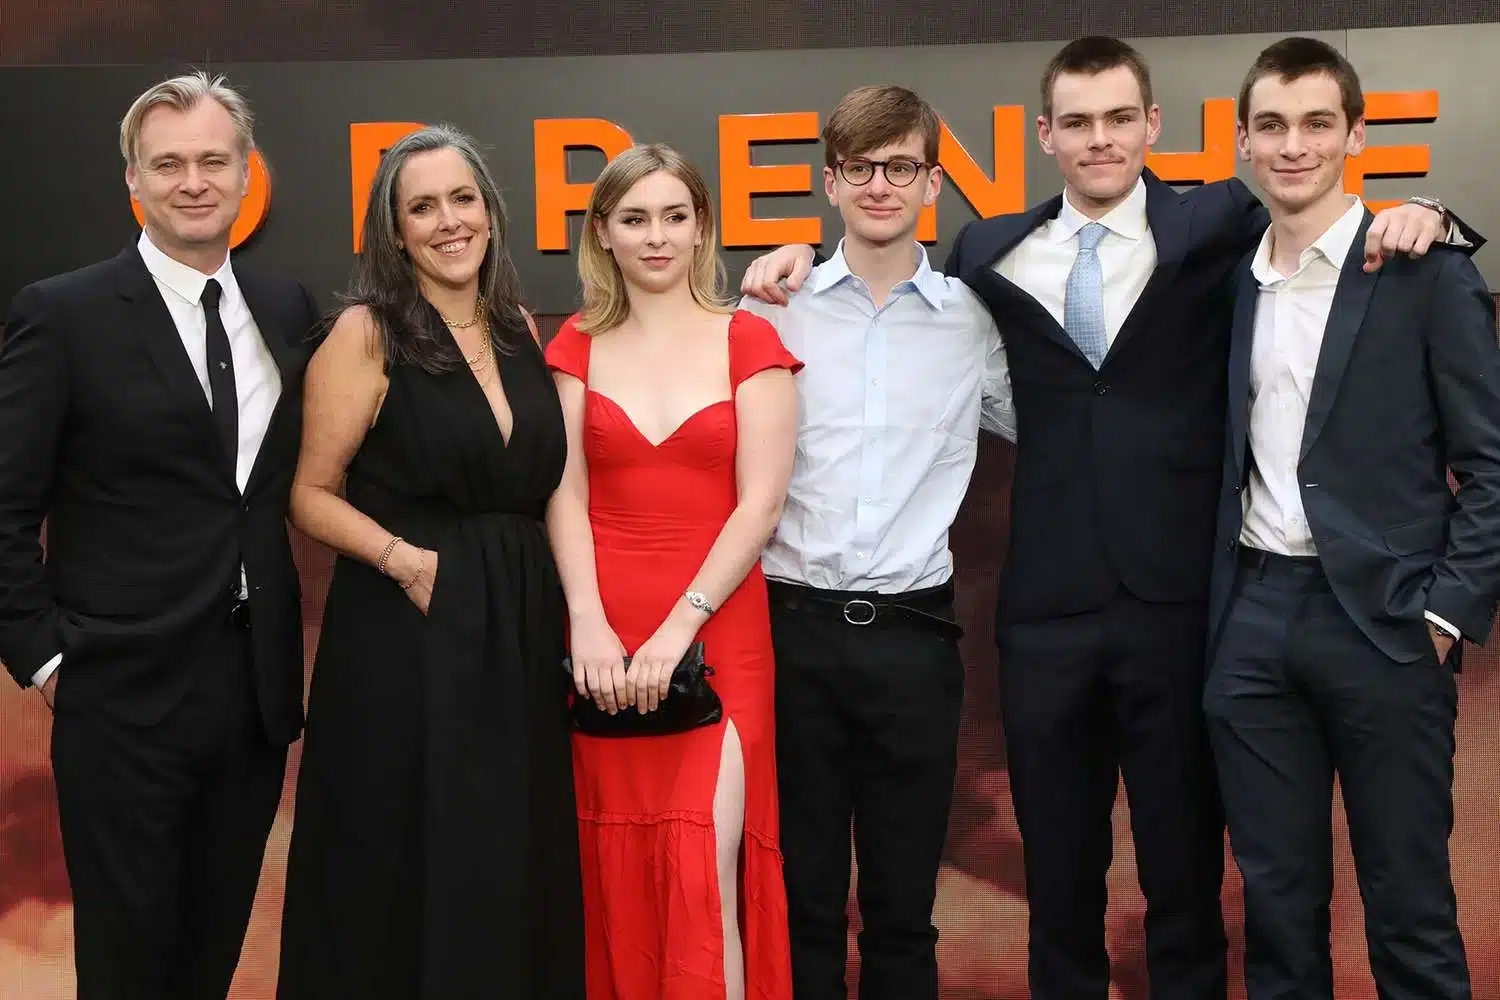 Christopher Nolan's family